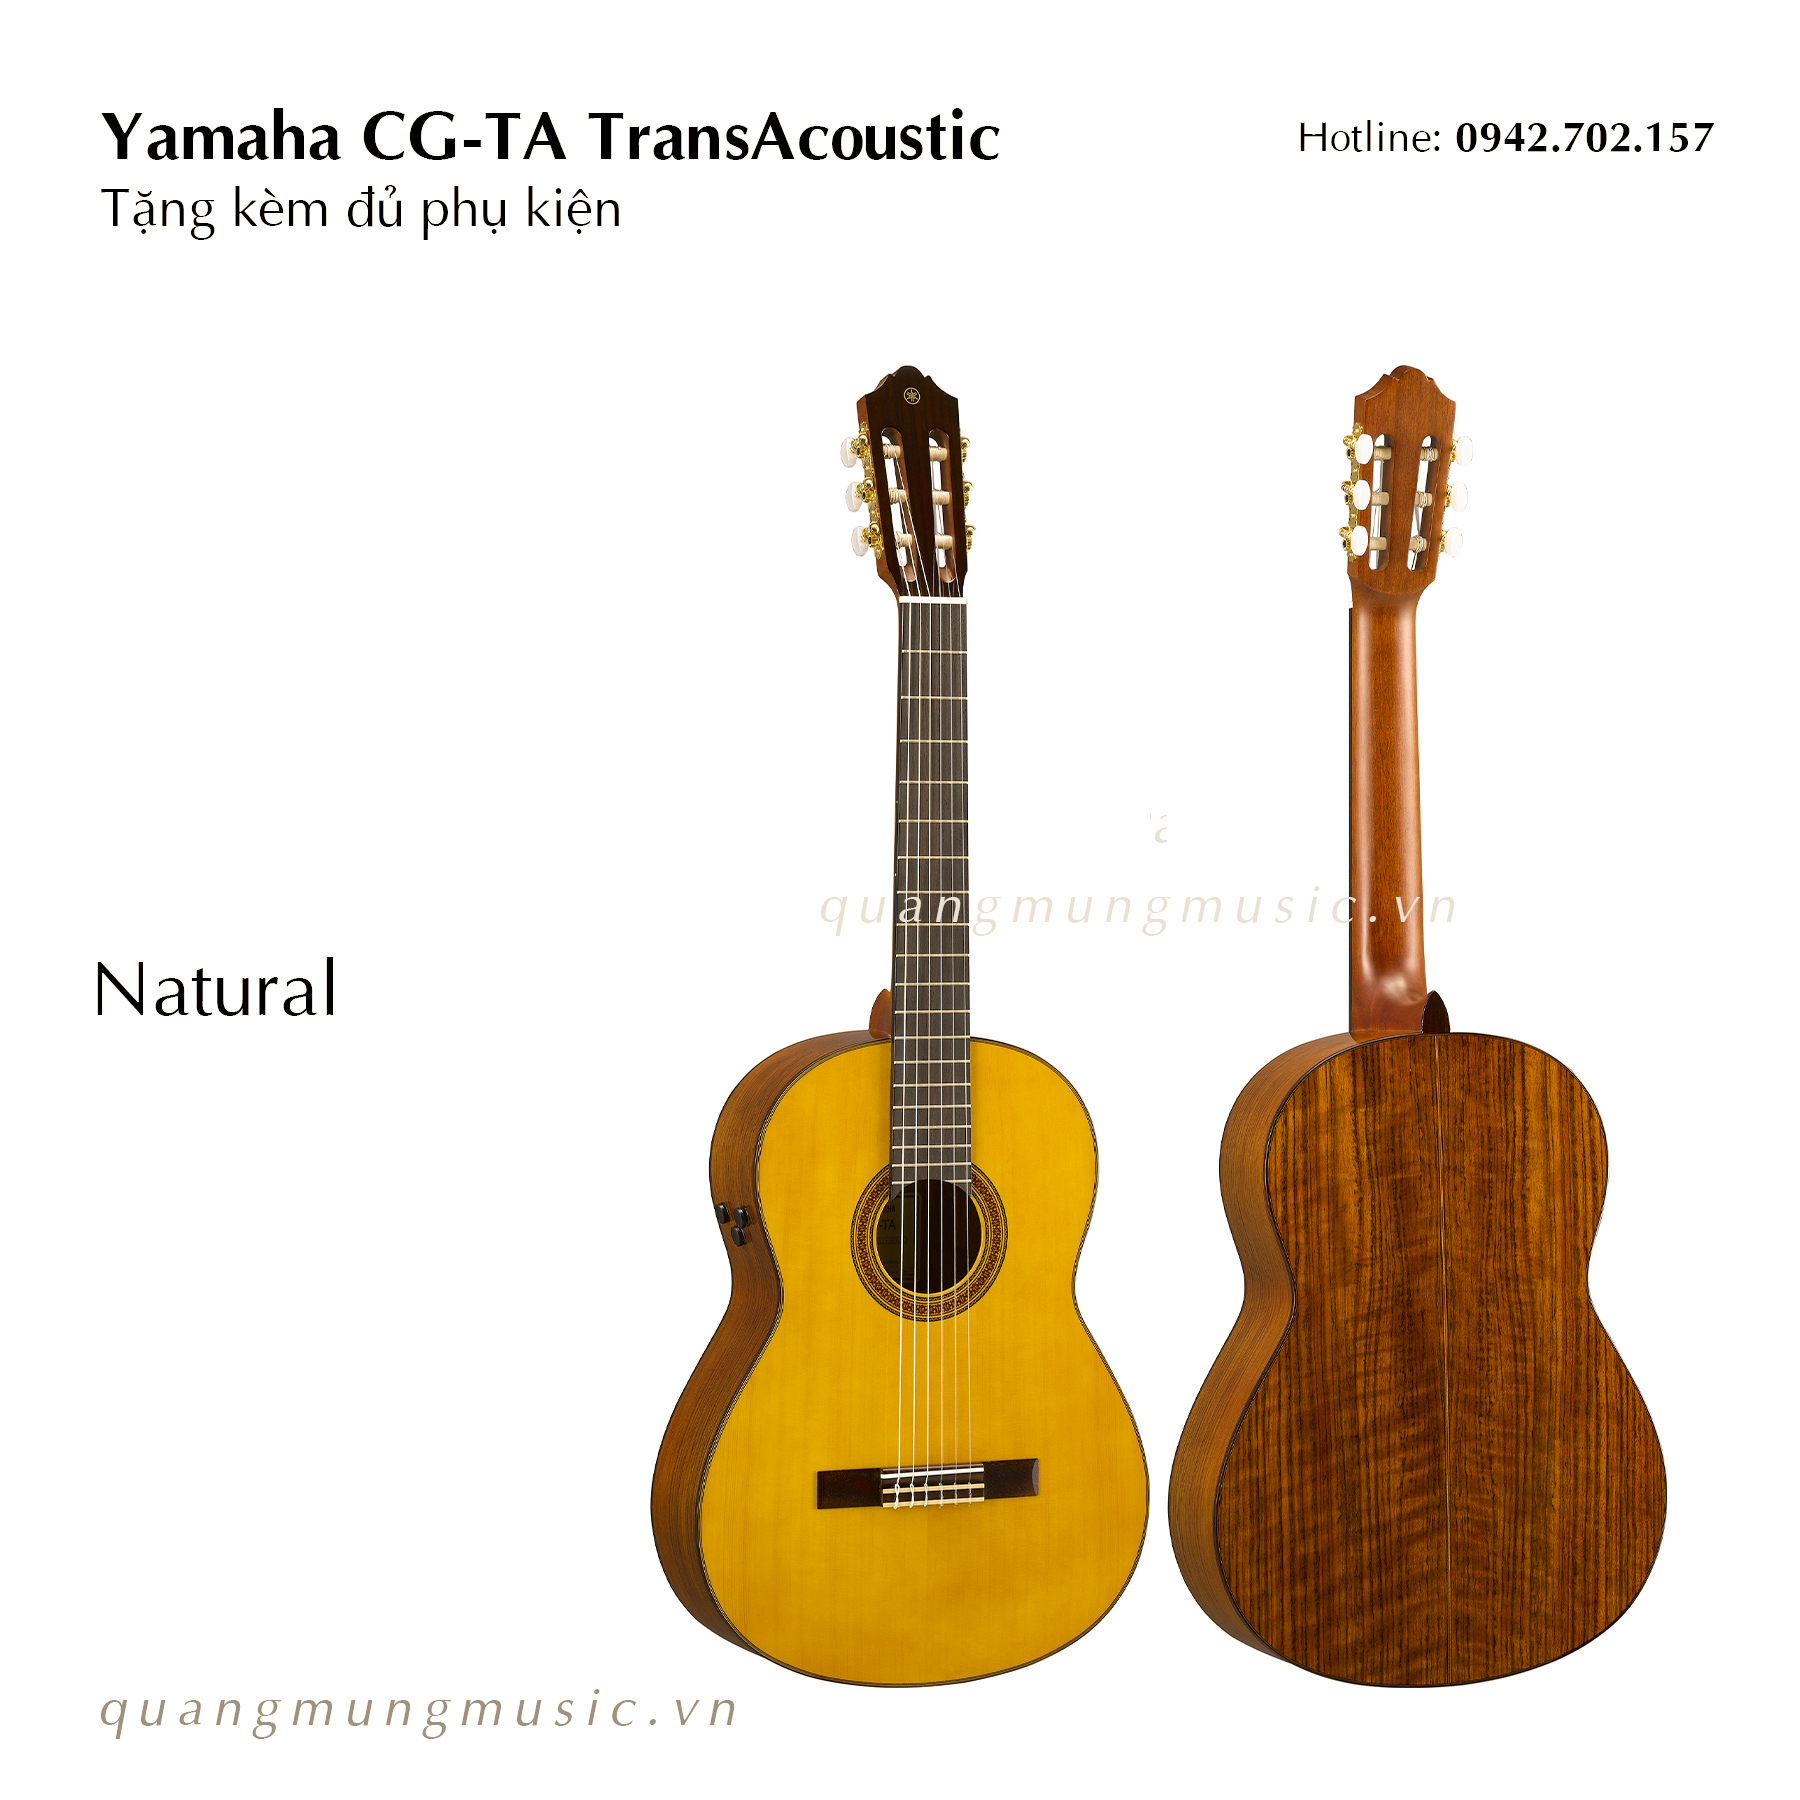 Yamaha CG-TA TransAcoustic